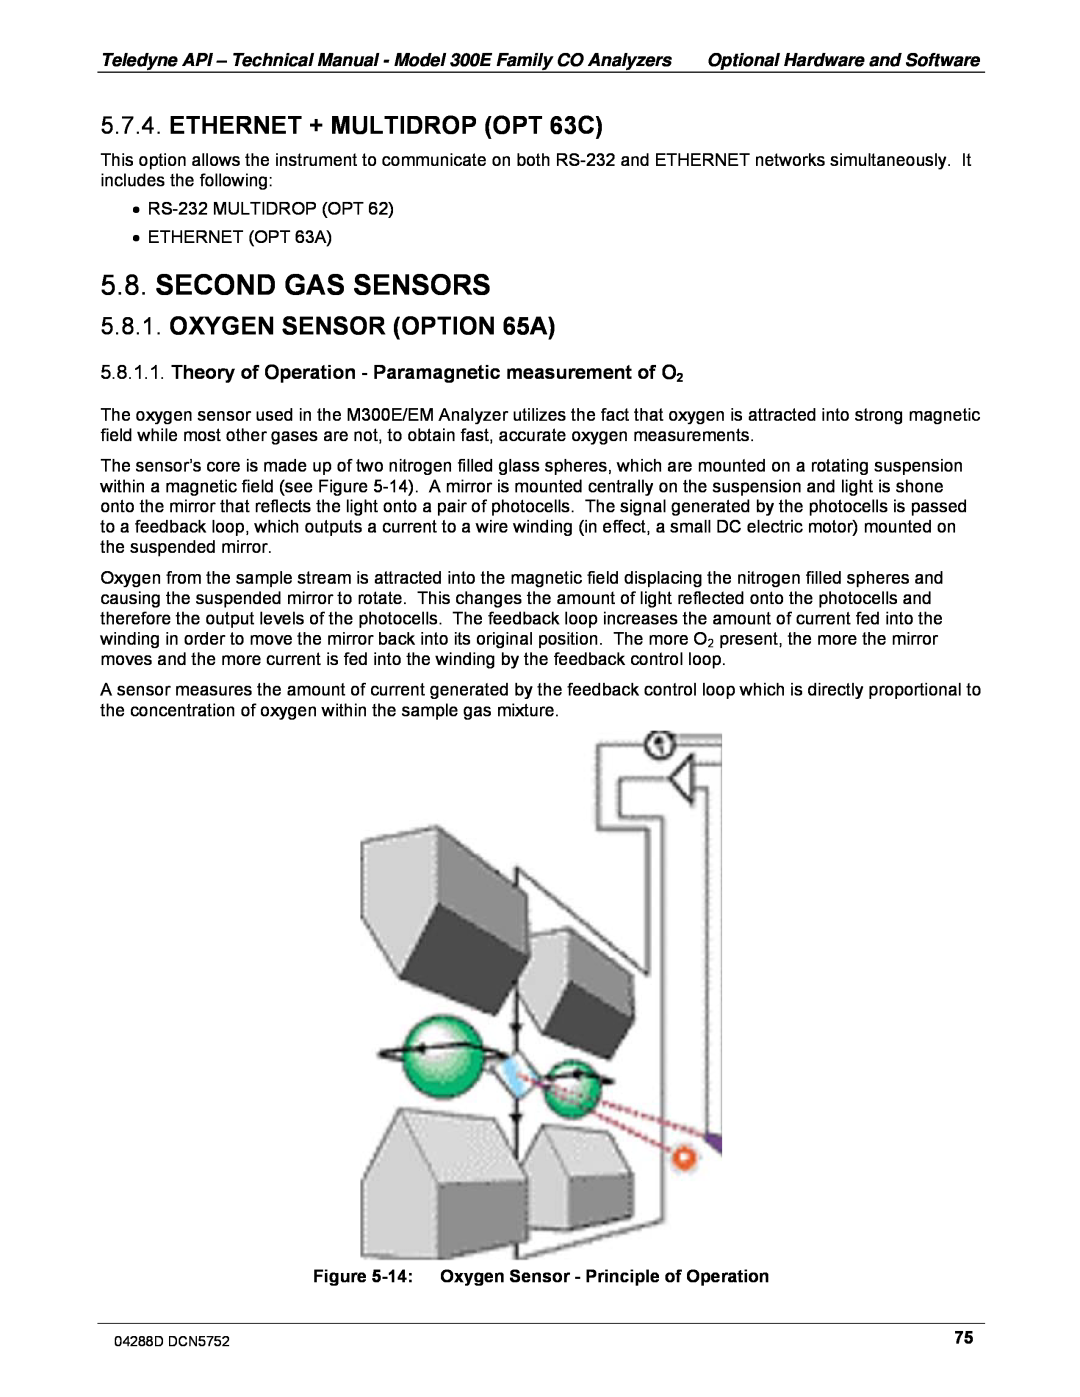 Teledyne M300EM operation manual Second Gas Sensors, ETHERNET + MULTIDROP OPT 63C, OXYGEN SENSOR OPTION 65A 